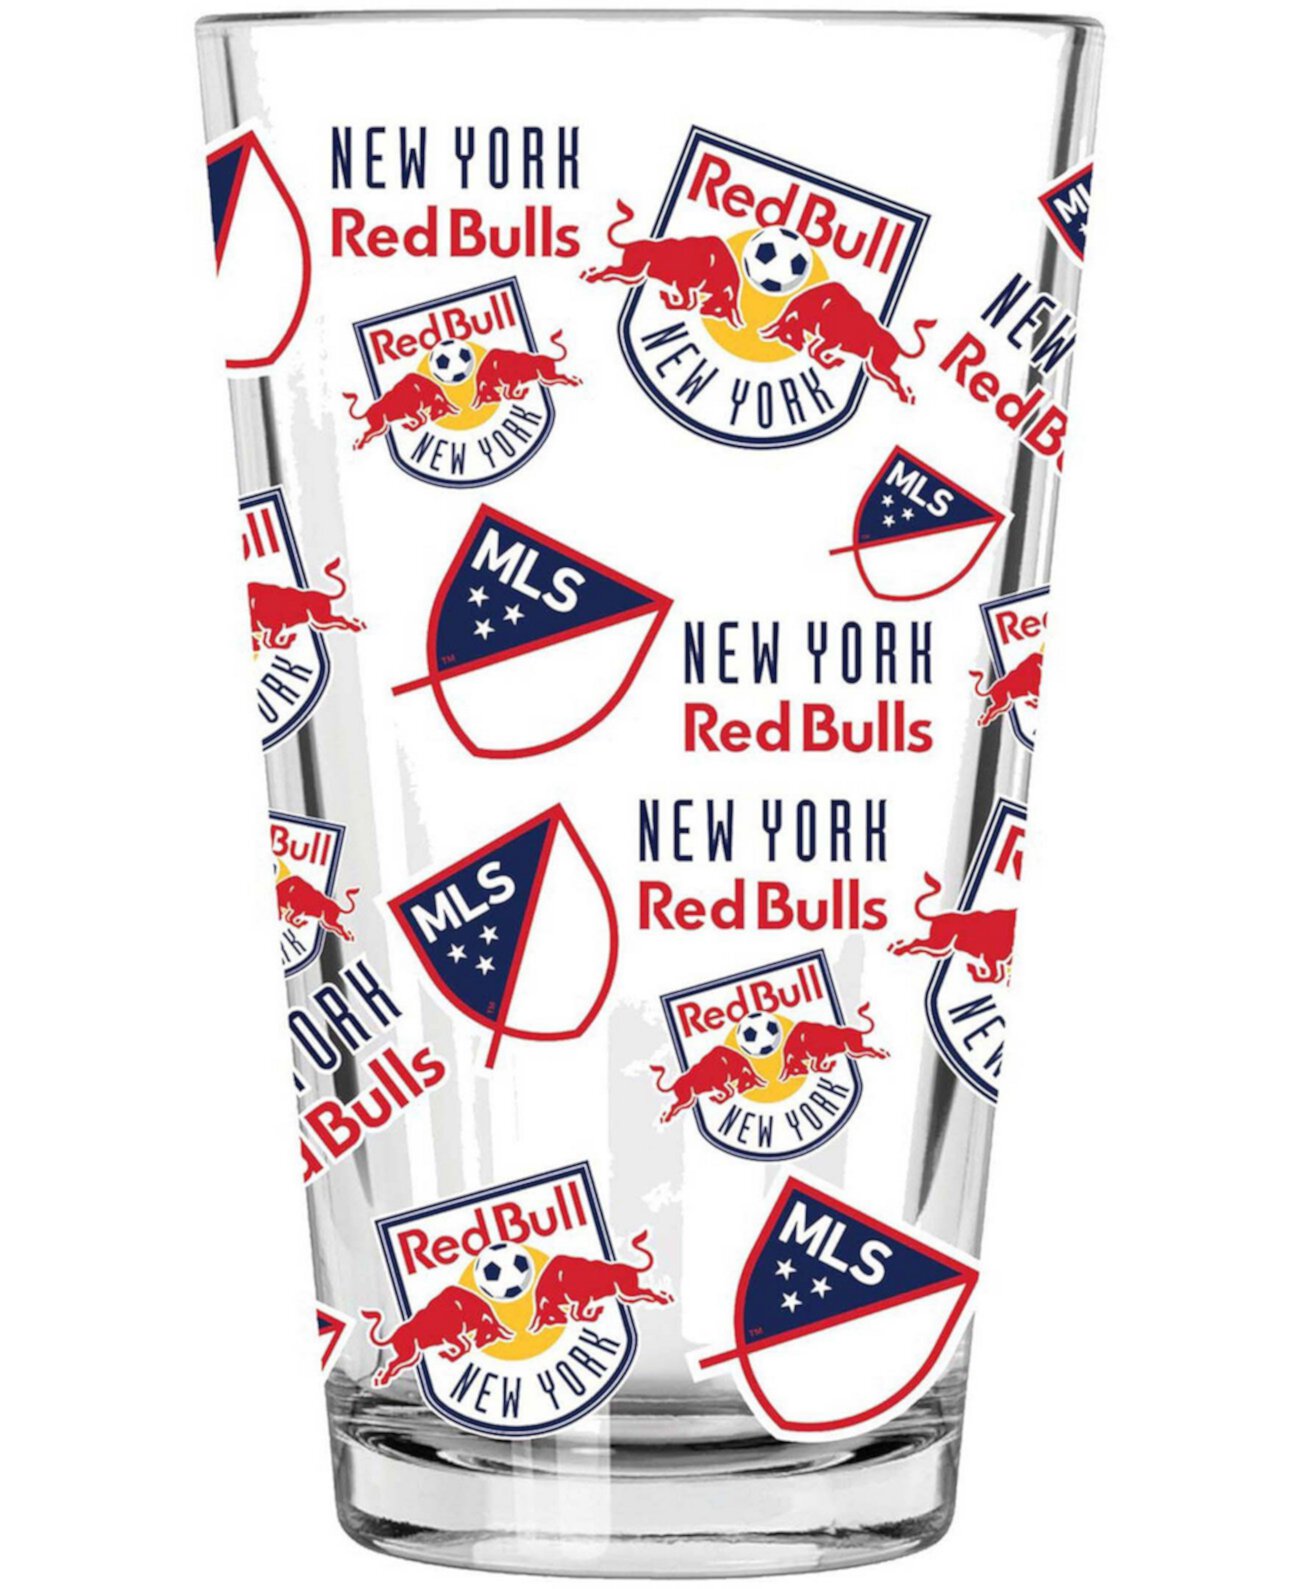 Мультистакан New York Red Bulls, 16 унций, пинта, полная упаковка Memory Company